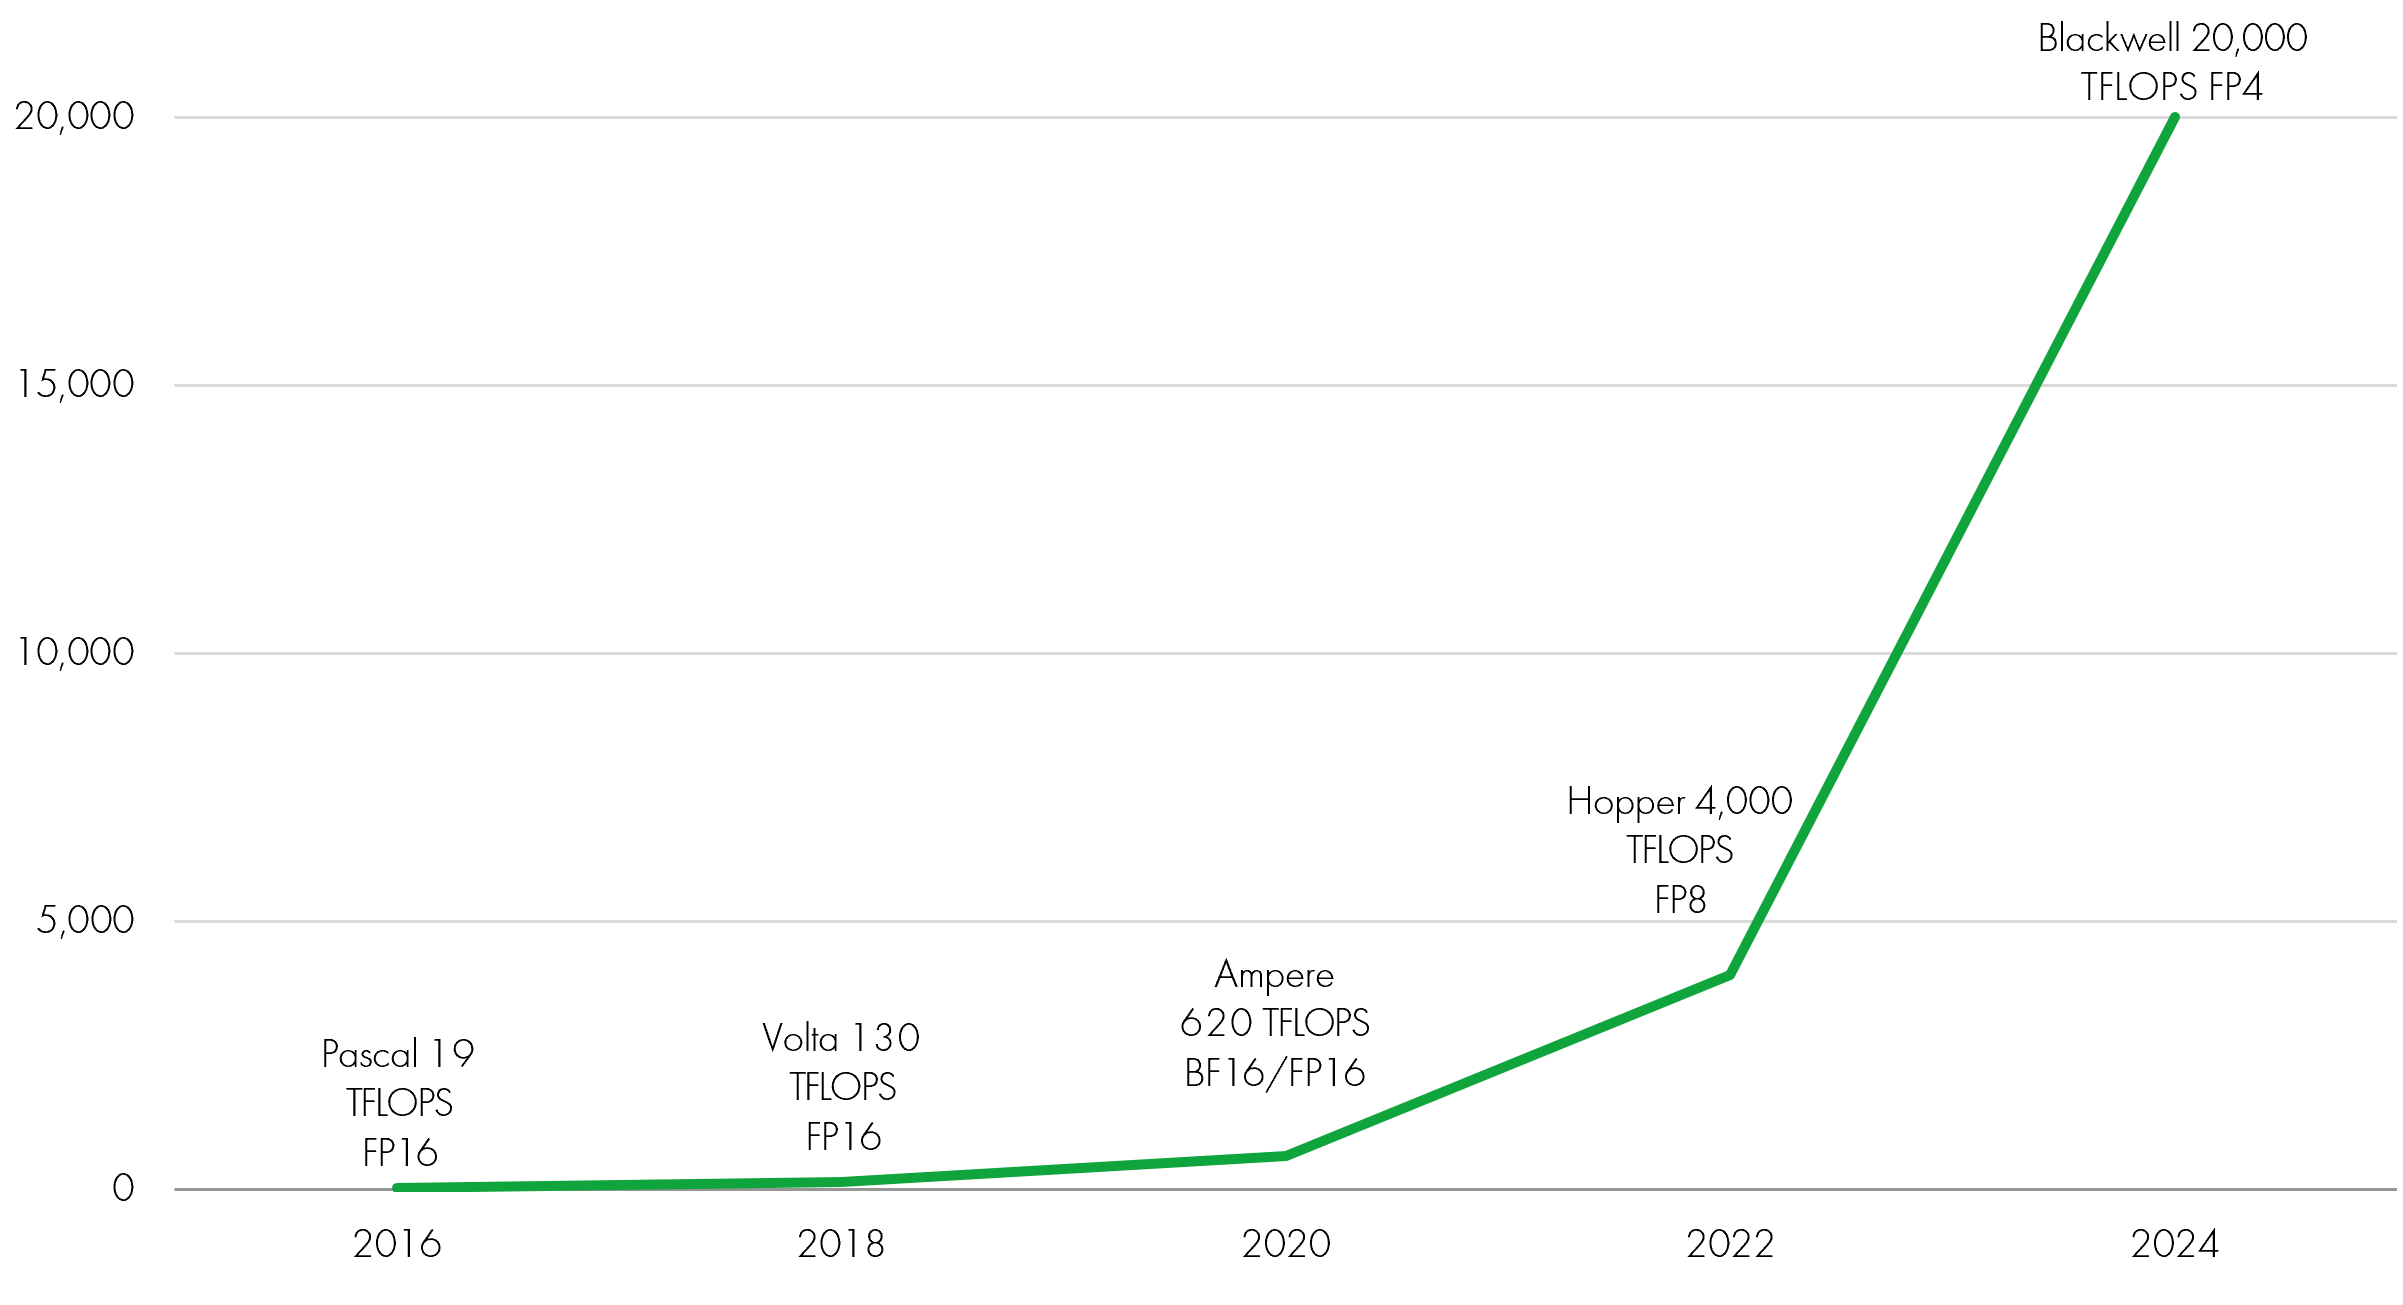 1000x AI compute in 8 years